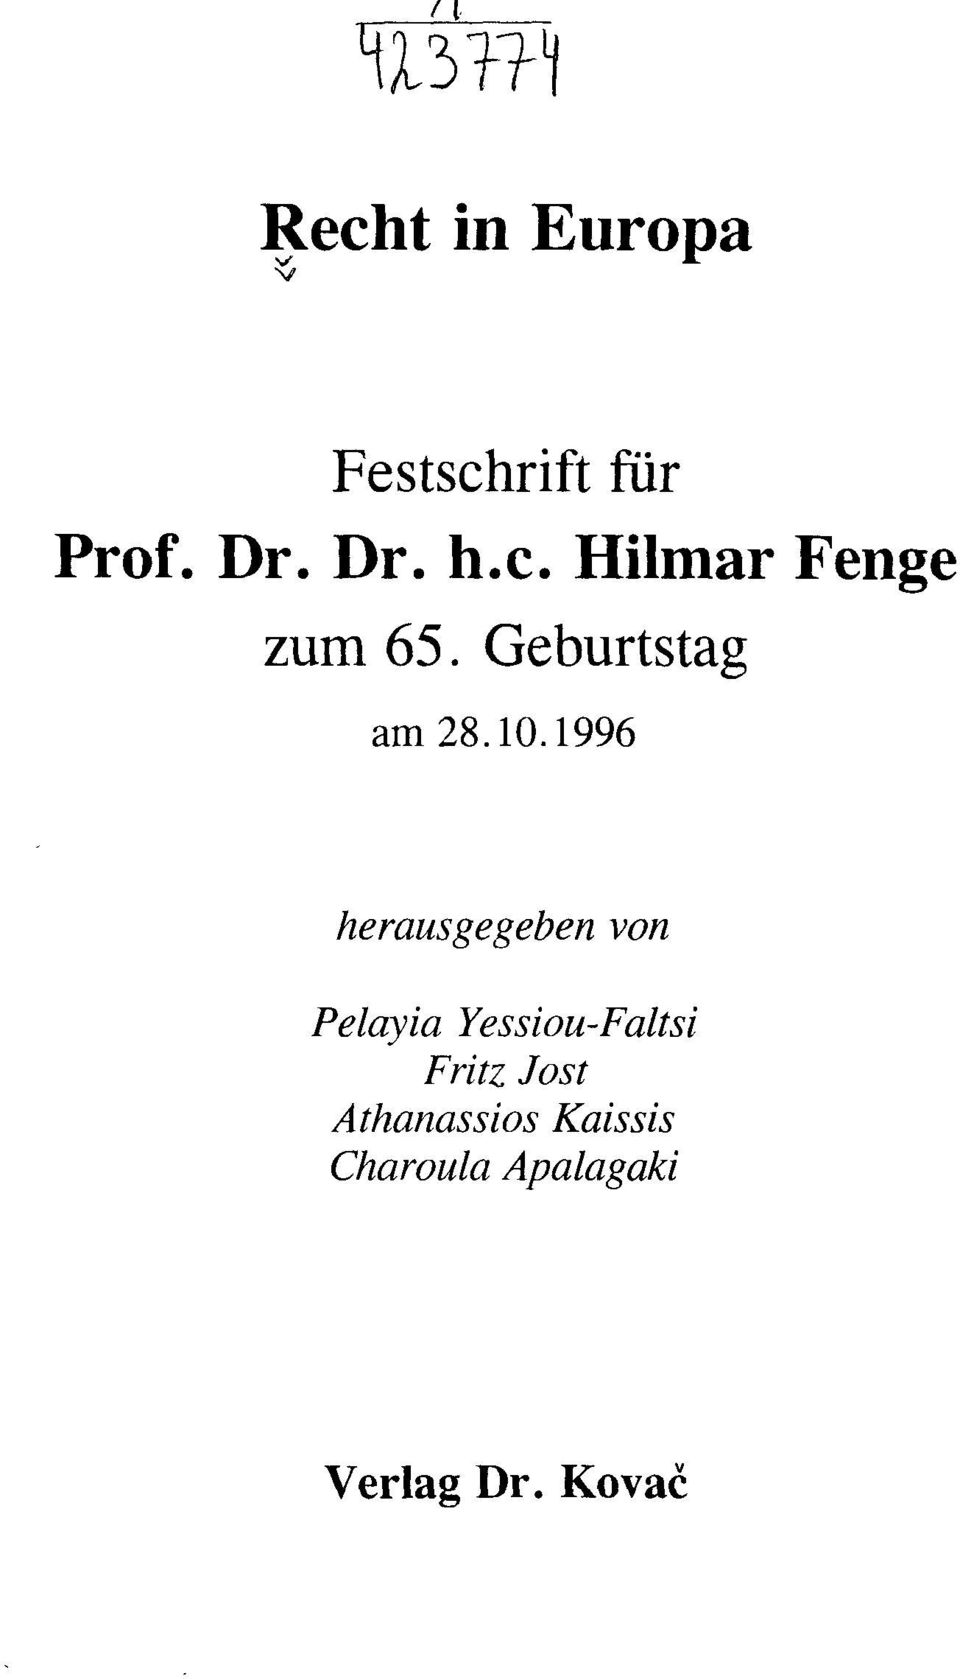 1996 herausgegeben von Pelayia Yessiou-Faltsi Fritz